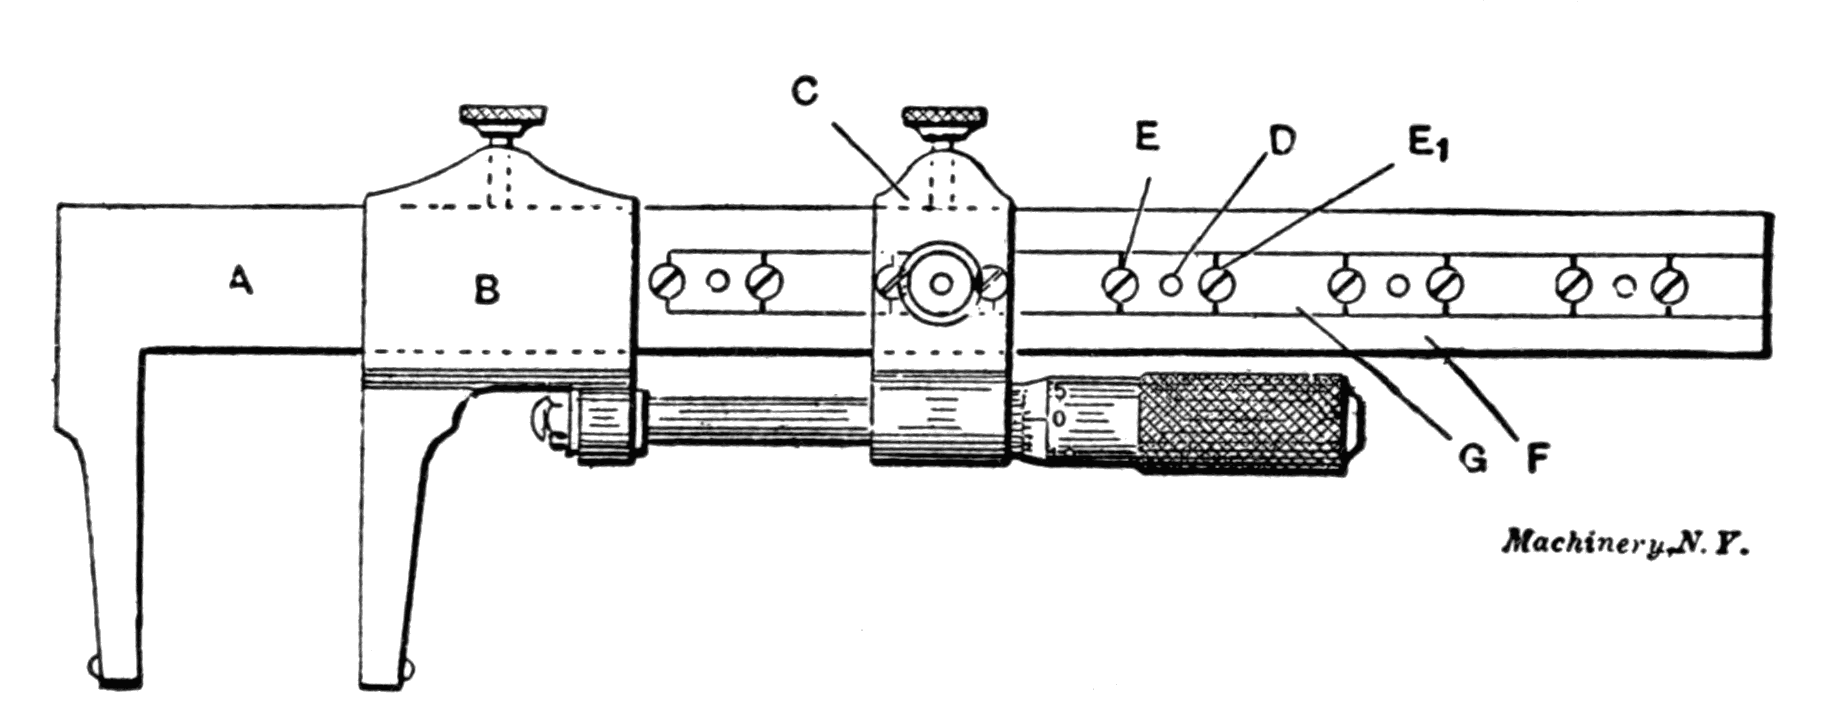 Fig. 17. Improved Micrometer Beam Caliper